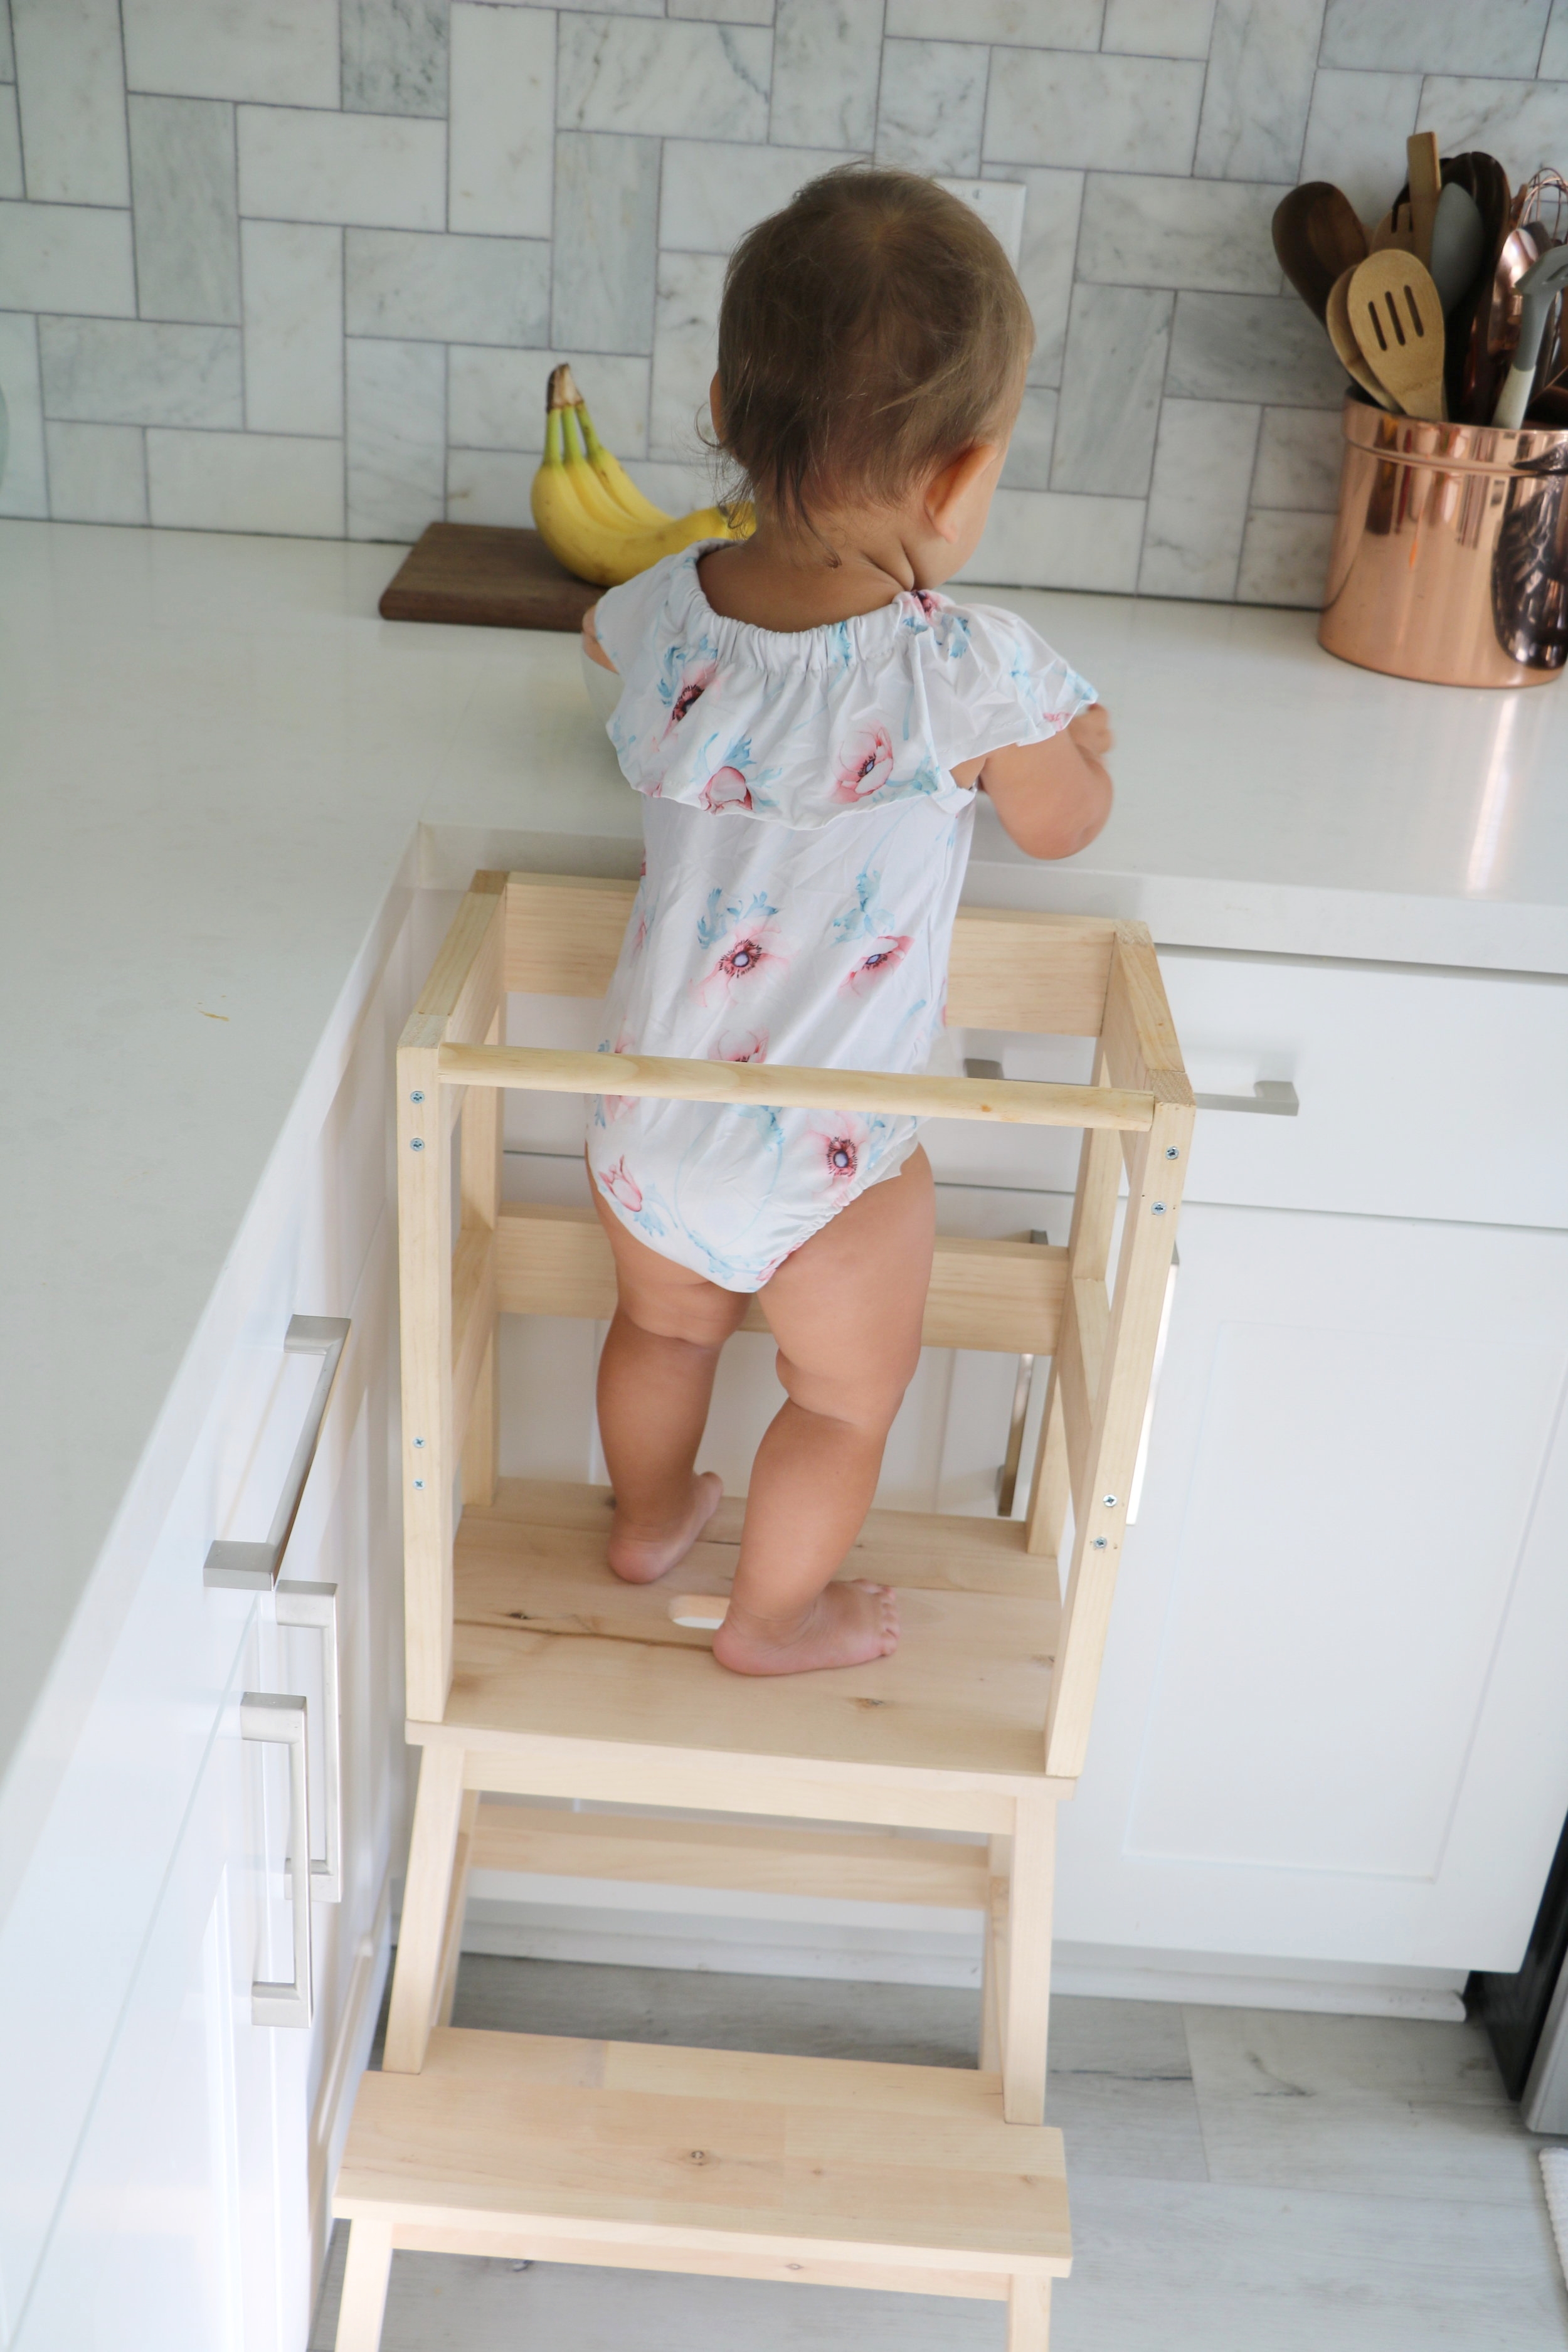 Diy Toddler Learning Tower Stool Brandi Milloy,Amazon Kitchen Best Sellers